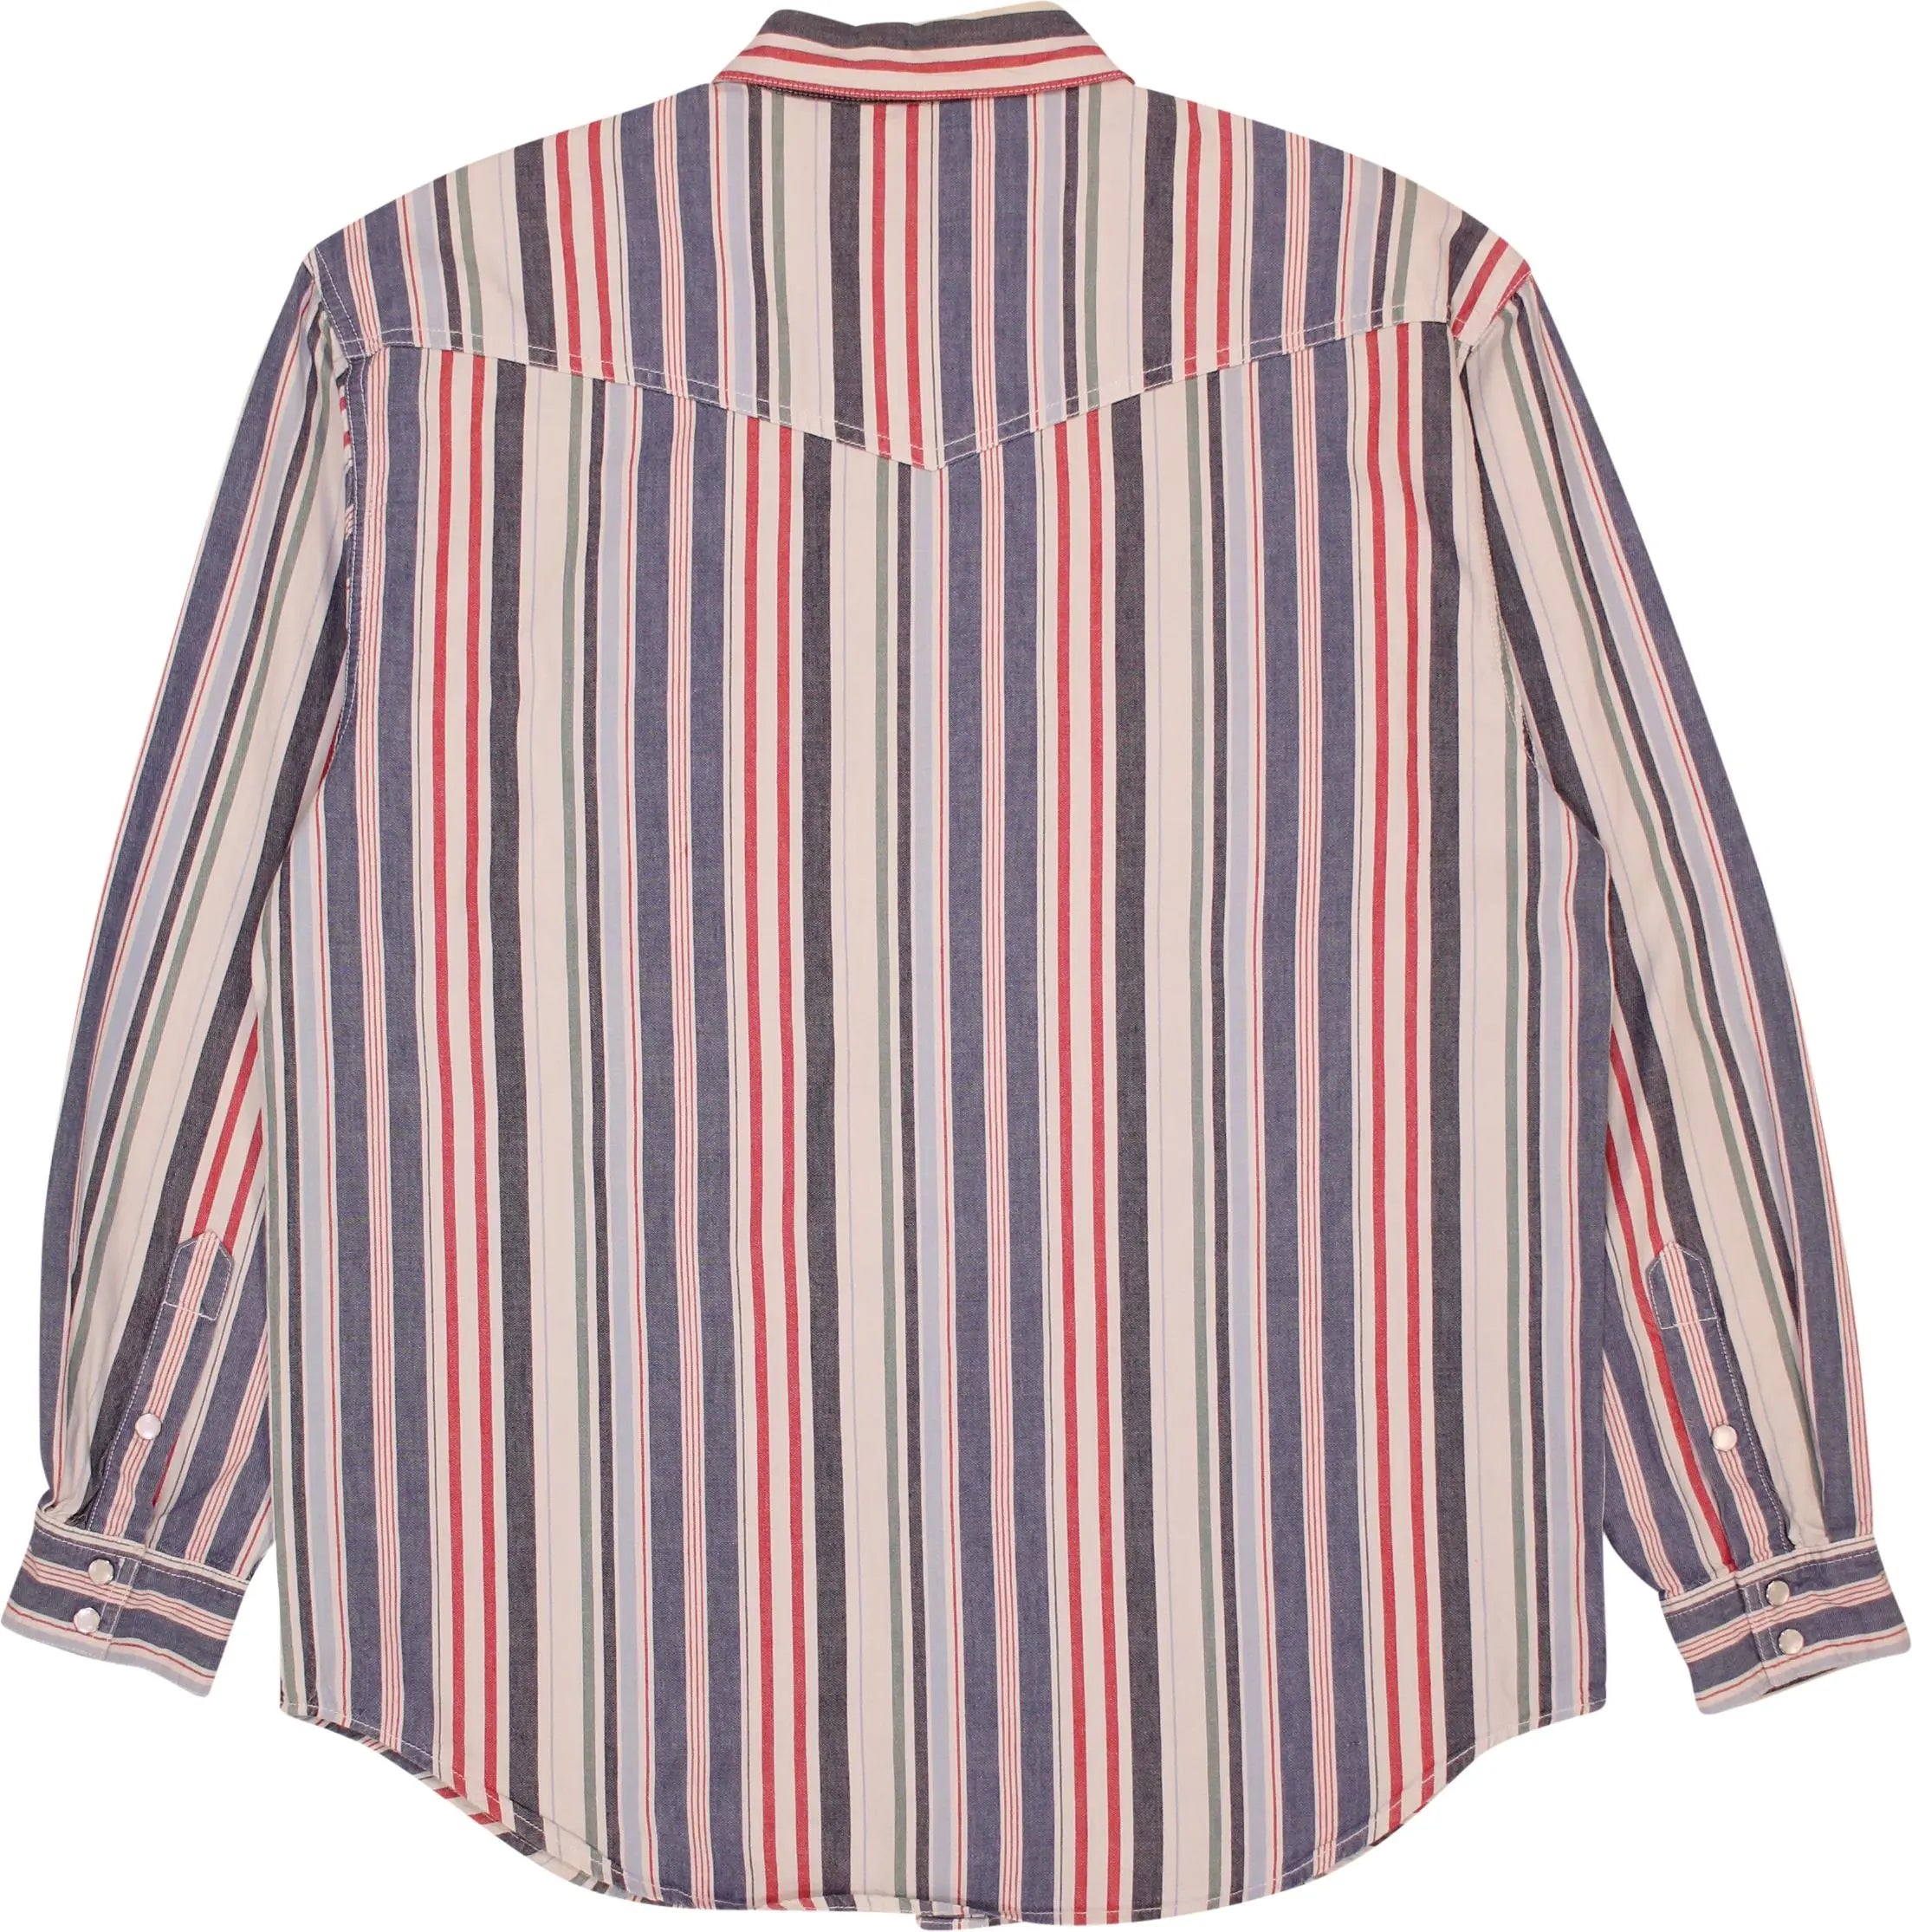 Wrangler - Wrangler Striped Shirt- ThriftTale.com - Vintage and second handclothing